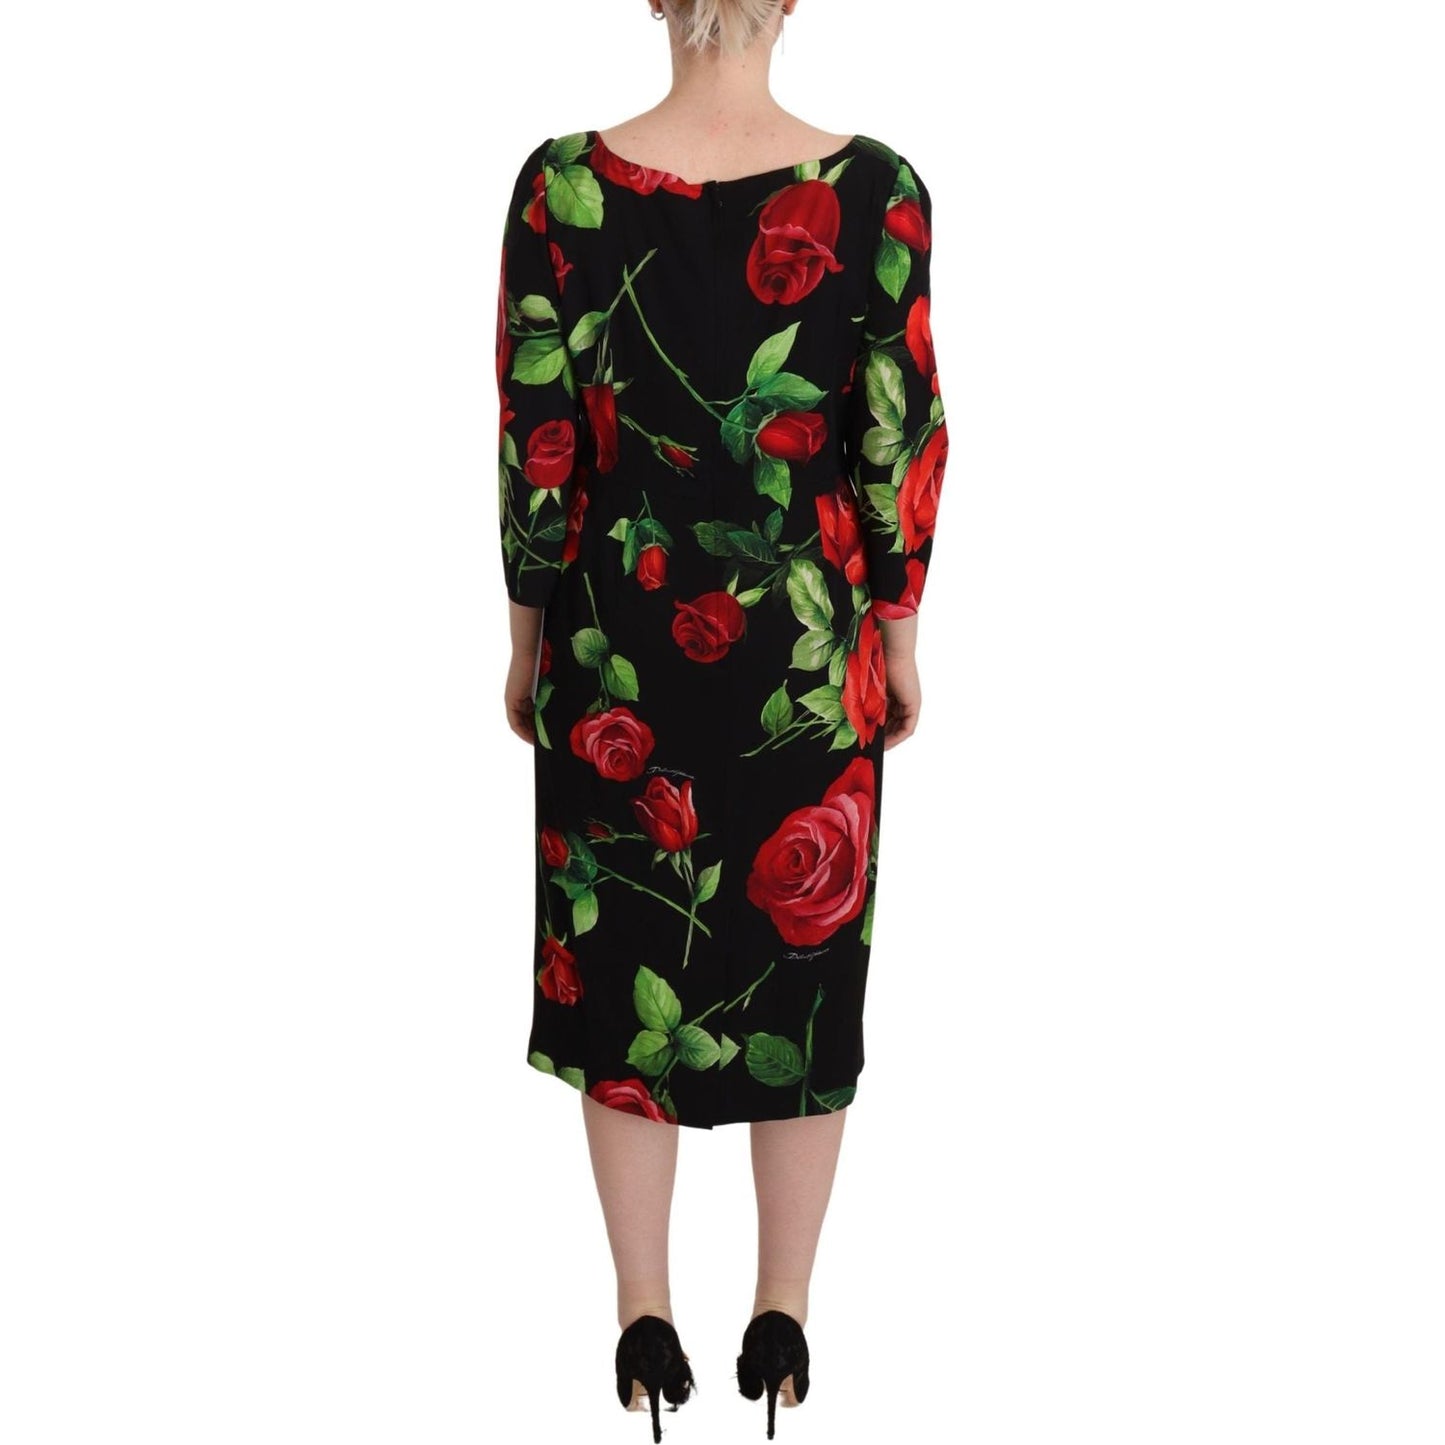 Dolce & Gabbana Elegant Floral Print Silk Sheath Dress black-red-roses-sheath-stretch-silk-dress IMG_7948-scaled-8c66243e-ee8.jpg